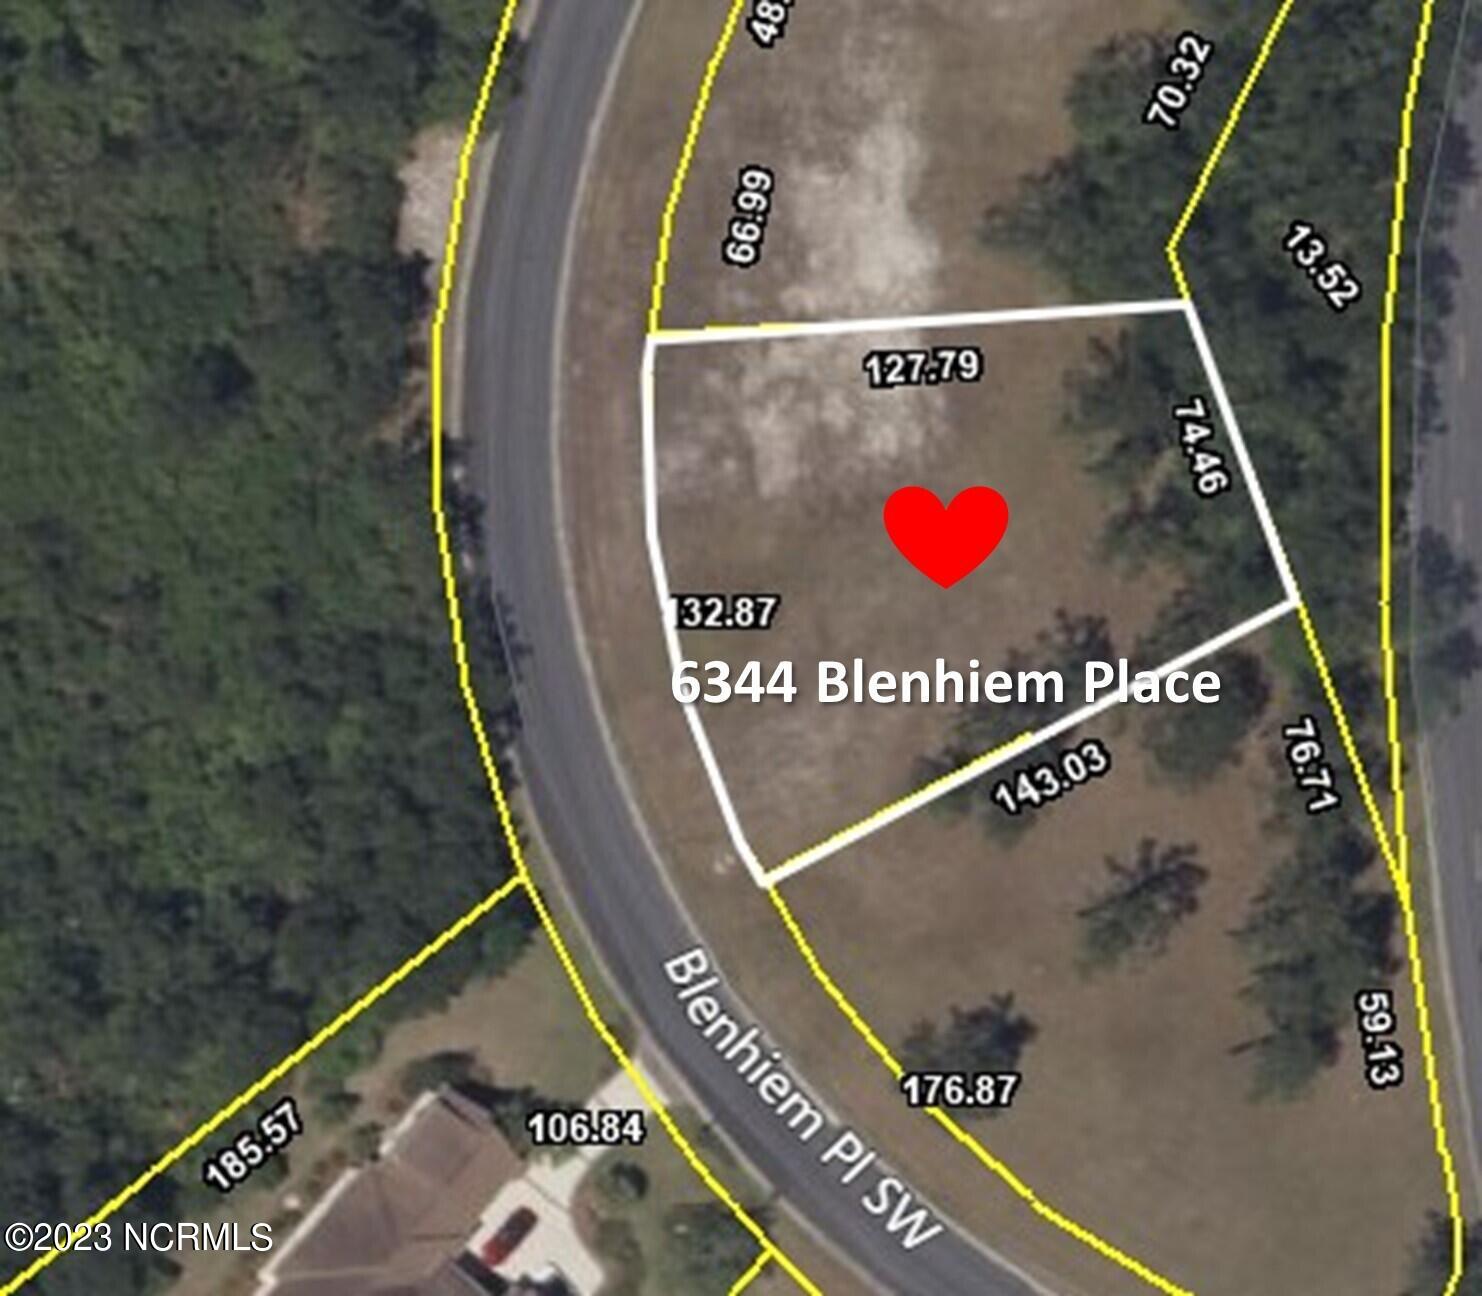 6344 Blenhiem Place Aerial Map IV-2-7